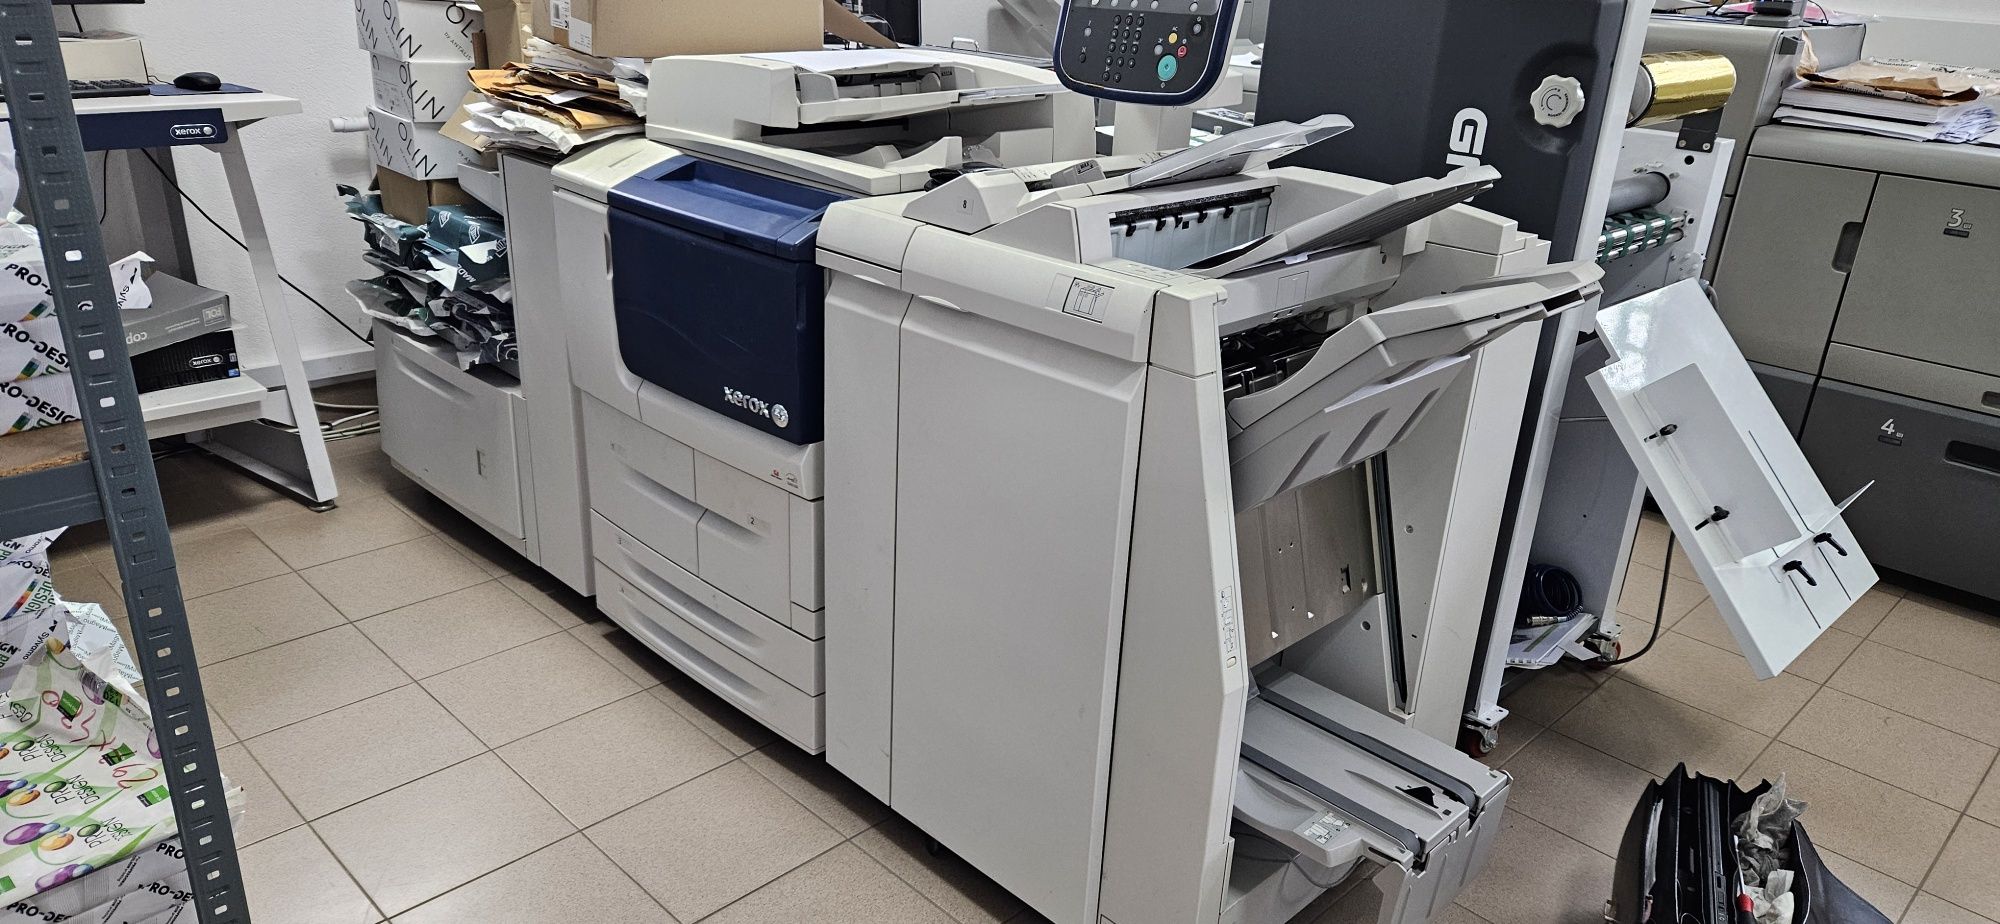 Drukarka produkcyjna ksero skaner Xerox D95 - jak nowa